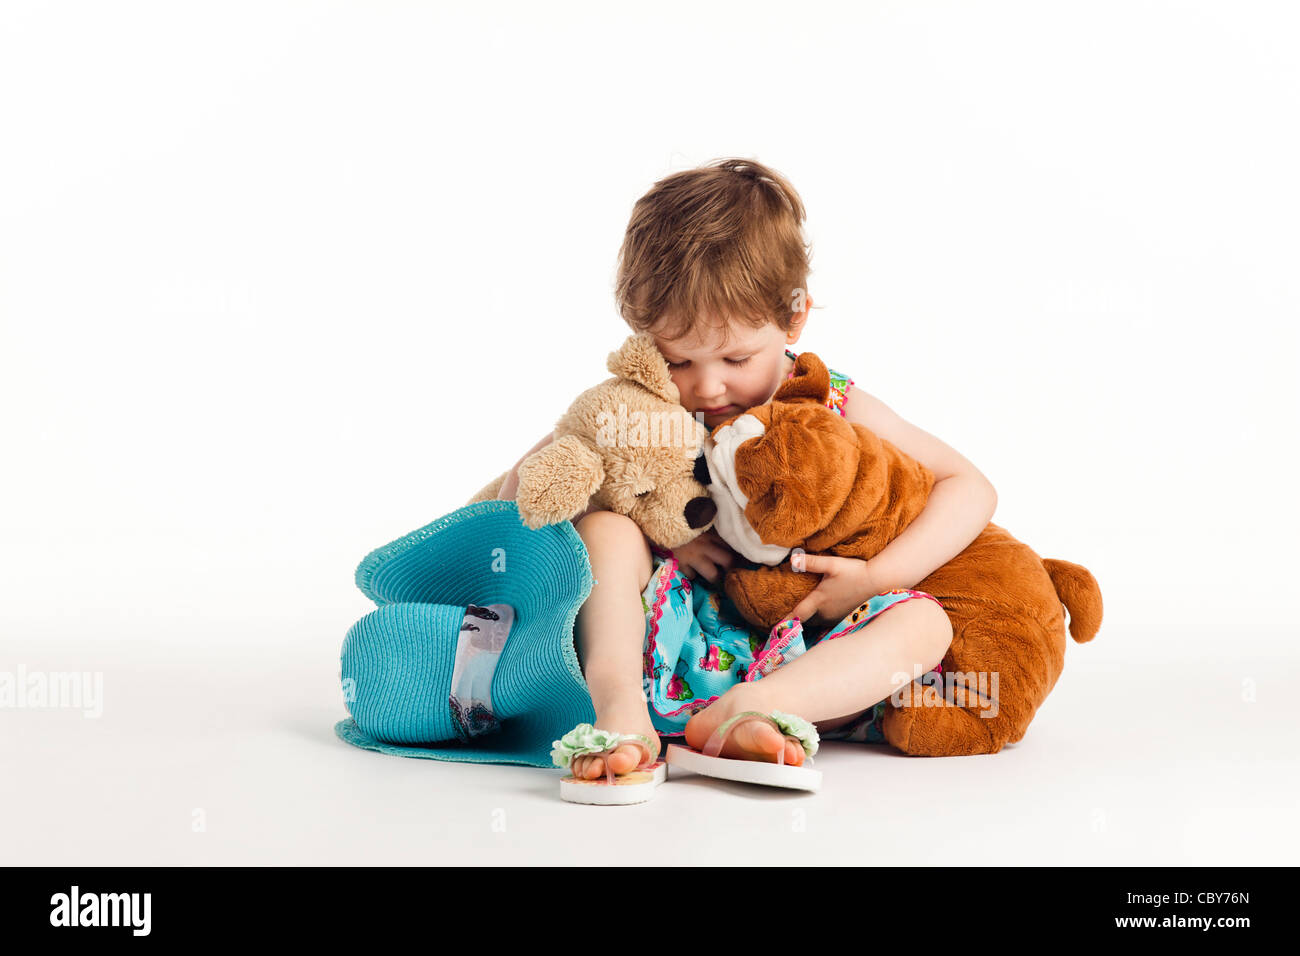 Sad Child with stuffed animals Stock Photo